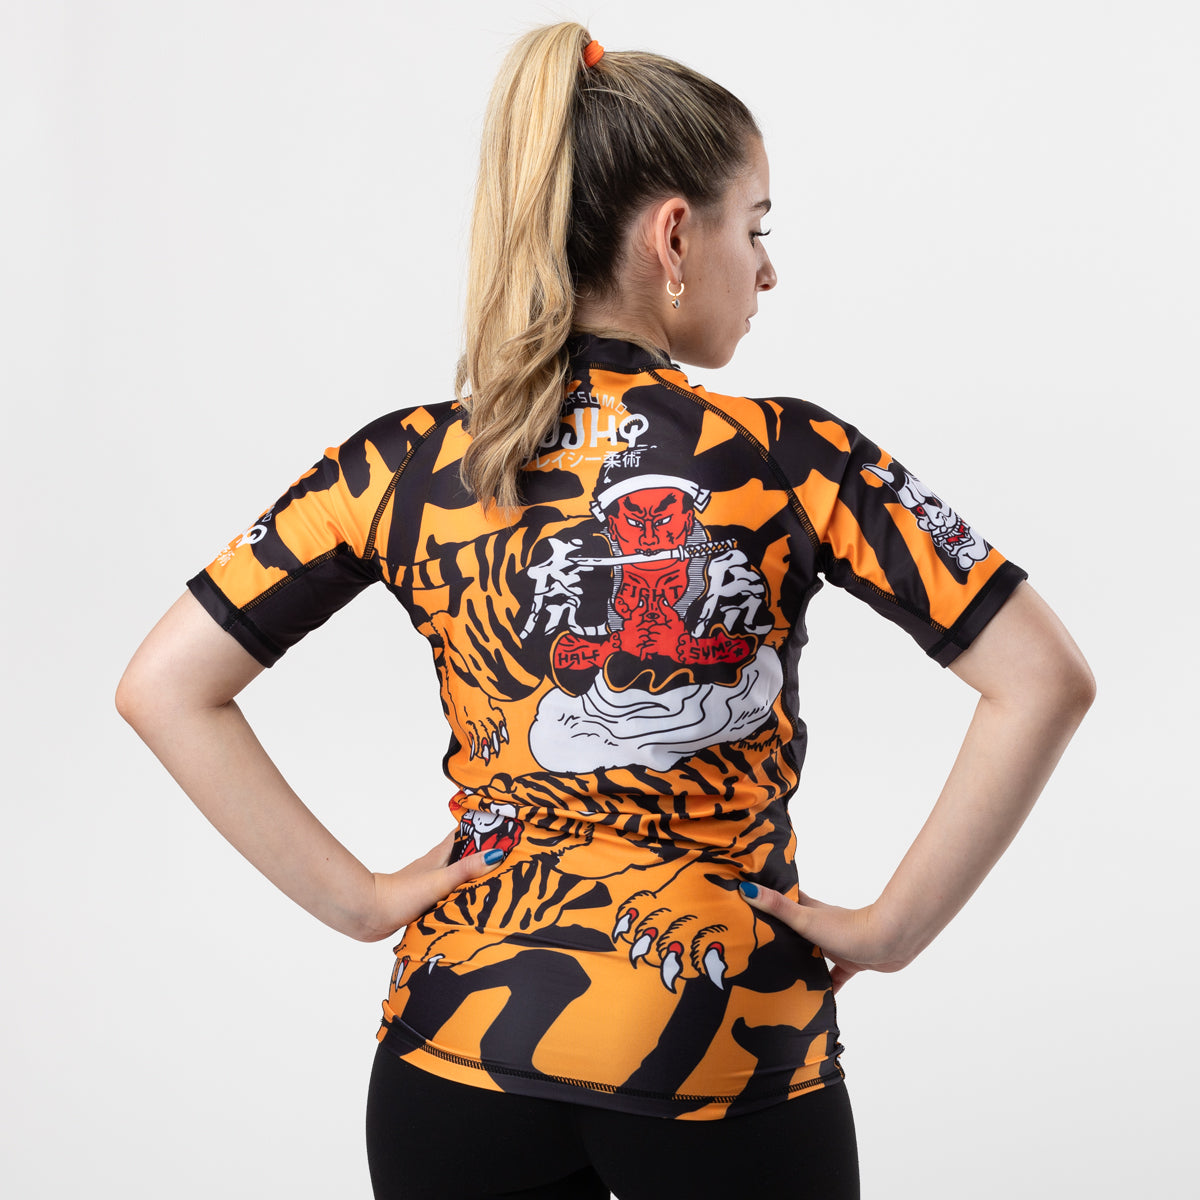 Half Sumo X HQ "Year of the Tiger" Women's Short Sleeve Rash Guard